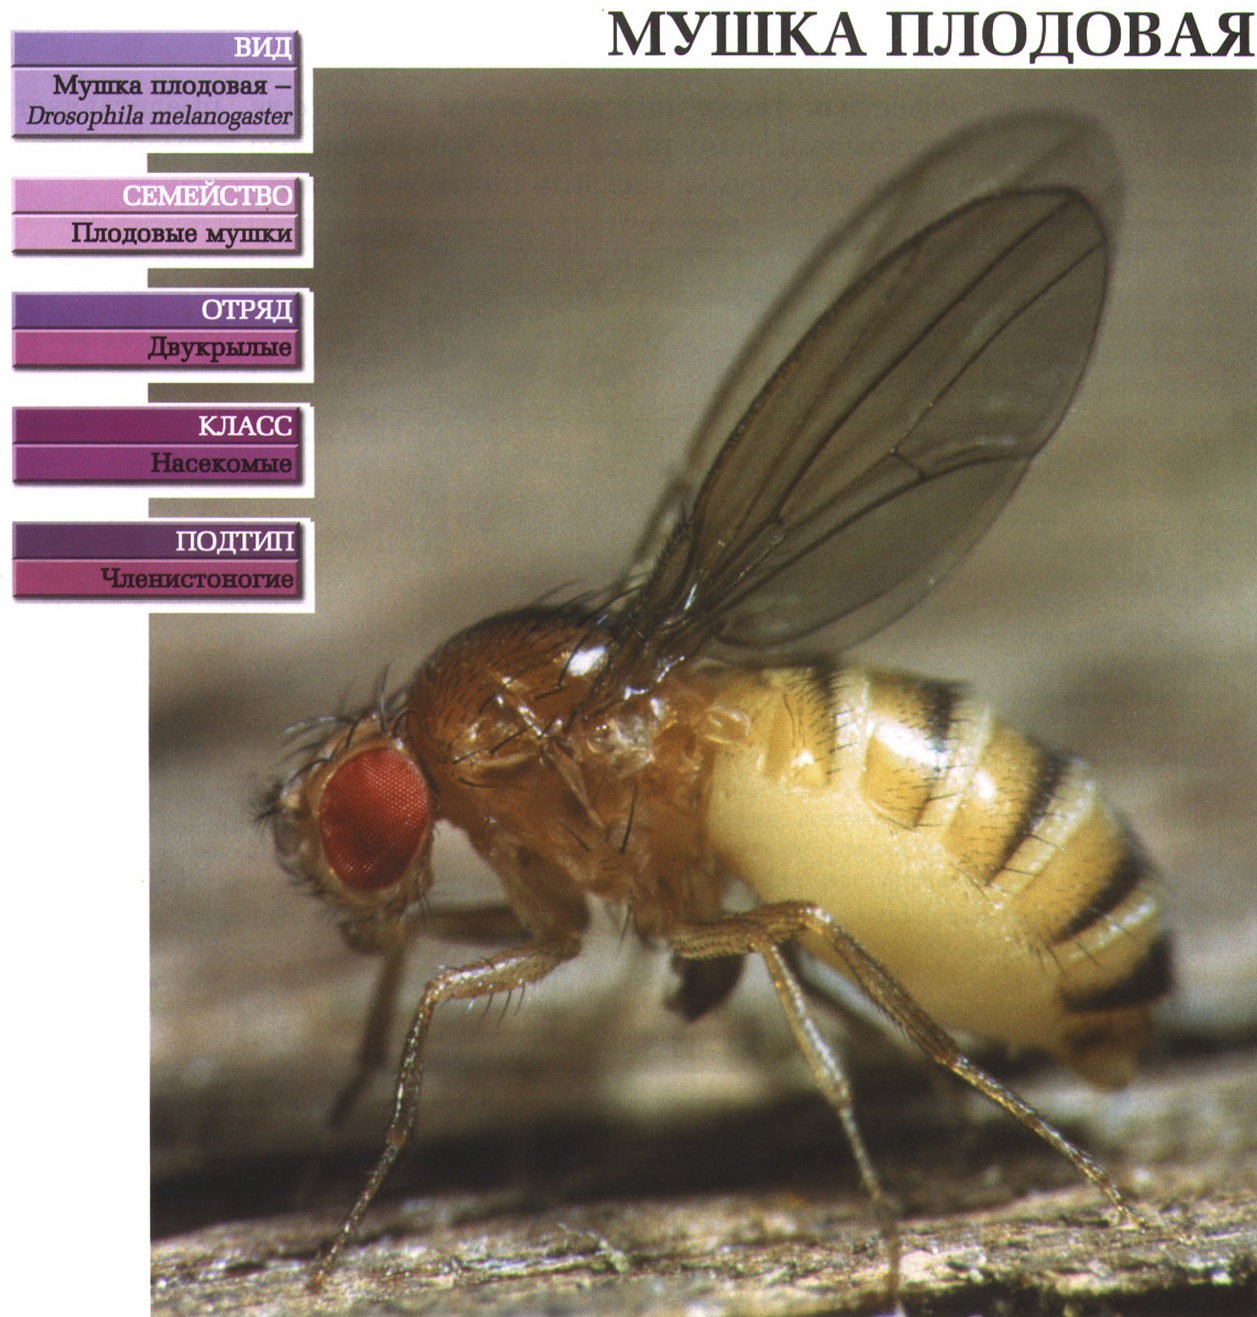 Систематика (научная классификация) плодовой мушки (дрозофилы). Drosophila melanogaster.